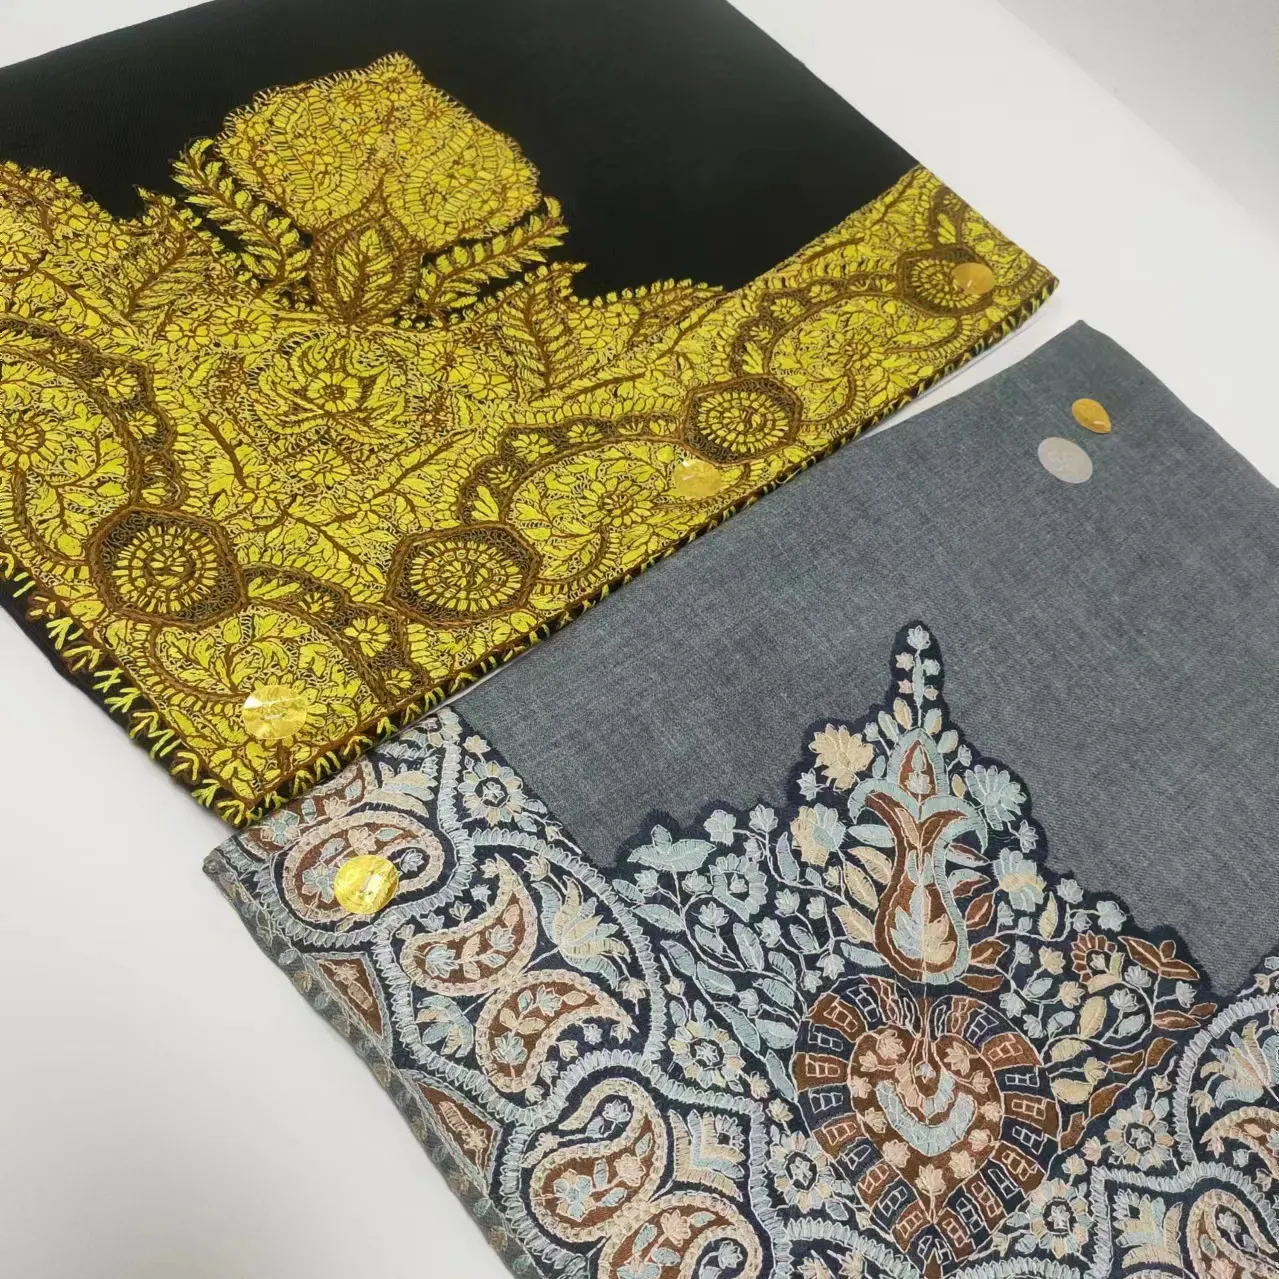 Châle arabe foulard musulman Shemagh foulard islamique hommes keffieh hijab écharpe cadeau grand hijab brodé cachemire 55x55 pouces